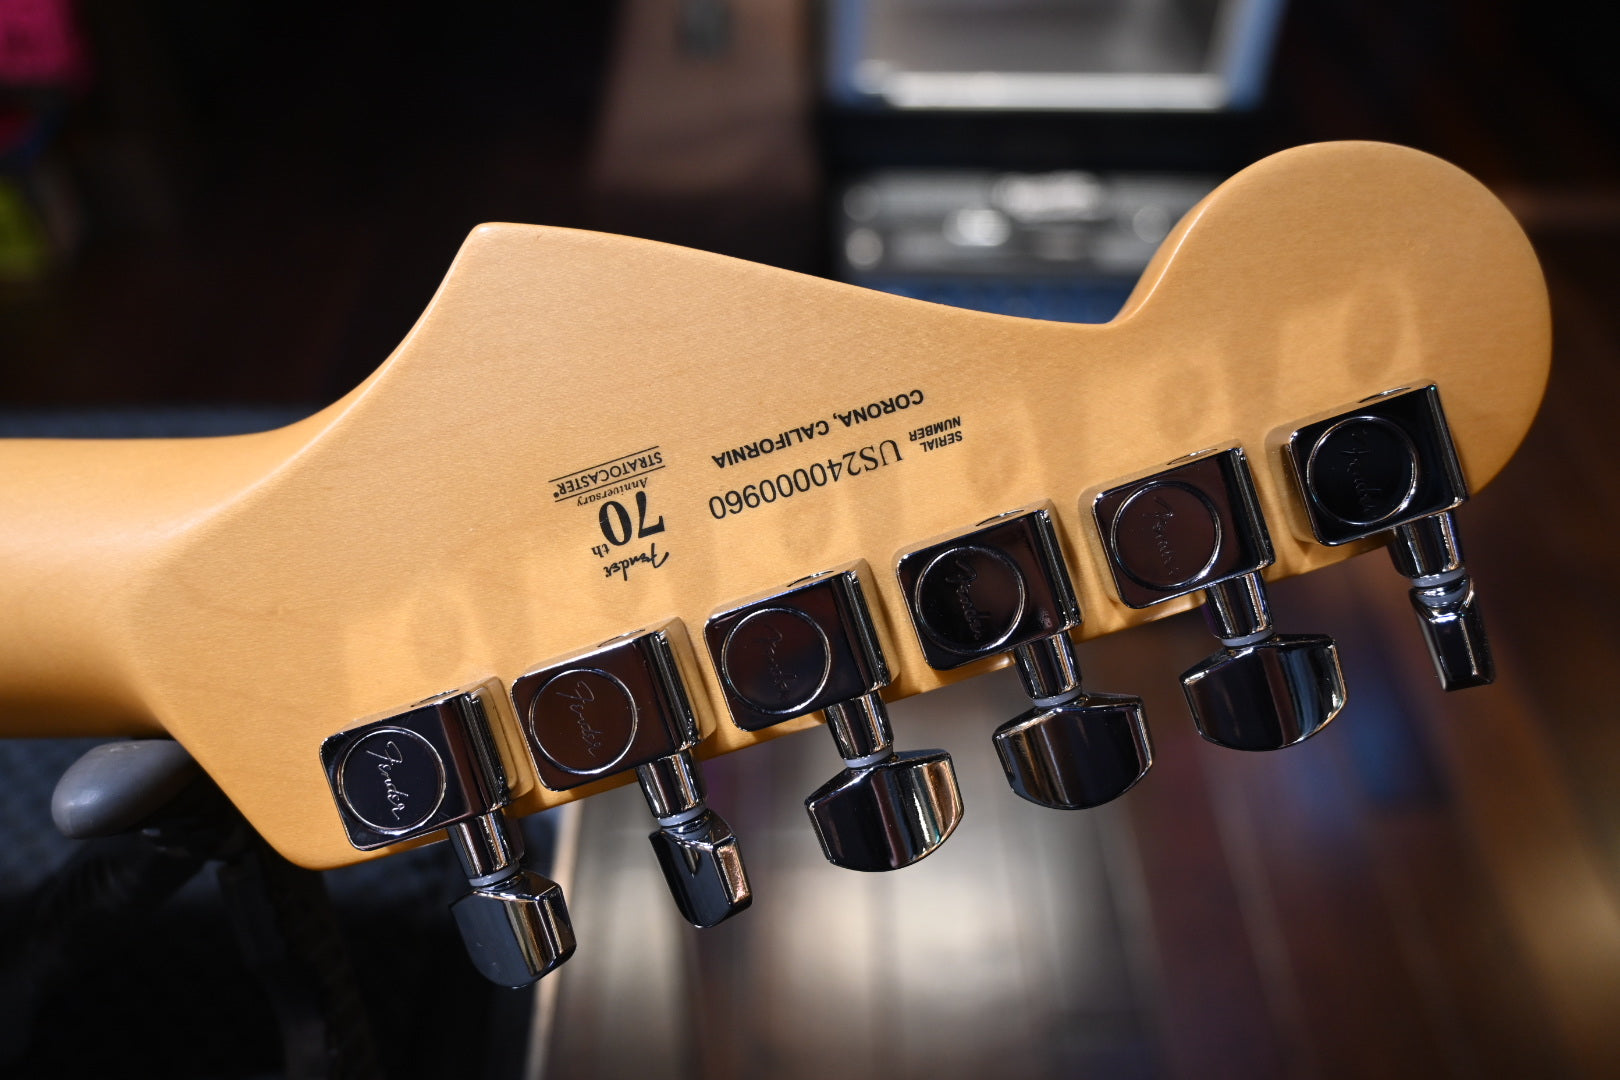 Fender American Professional II Stratocaster - Sienna Burst Guitar #0960